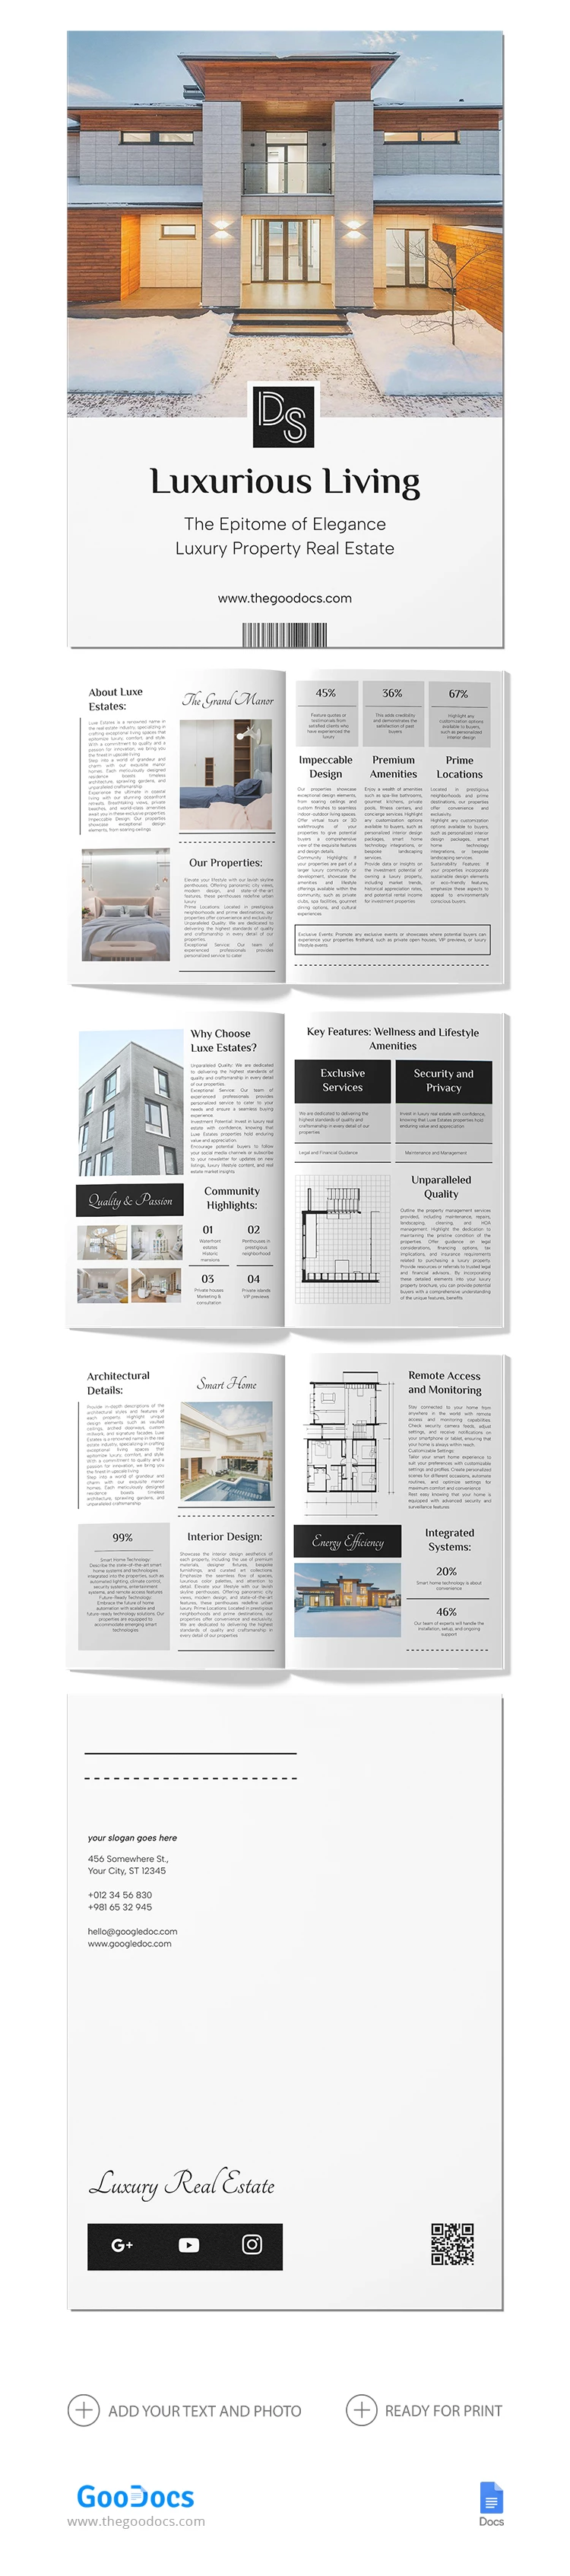 Luxury Real Estate Brochure - free Google Docs Template - 10068532